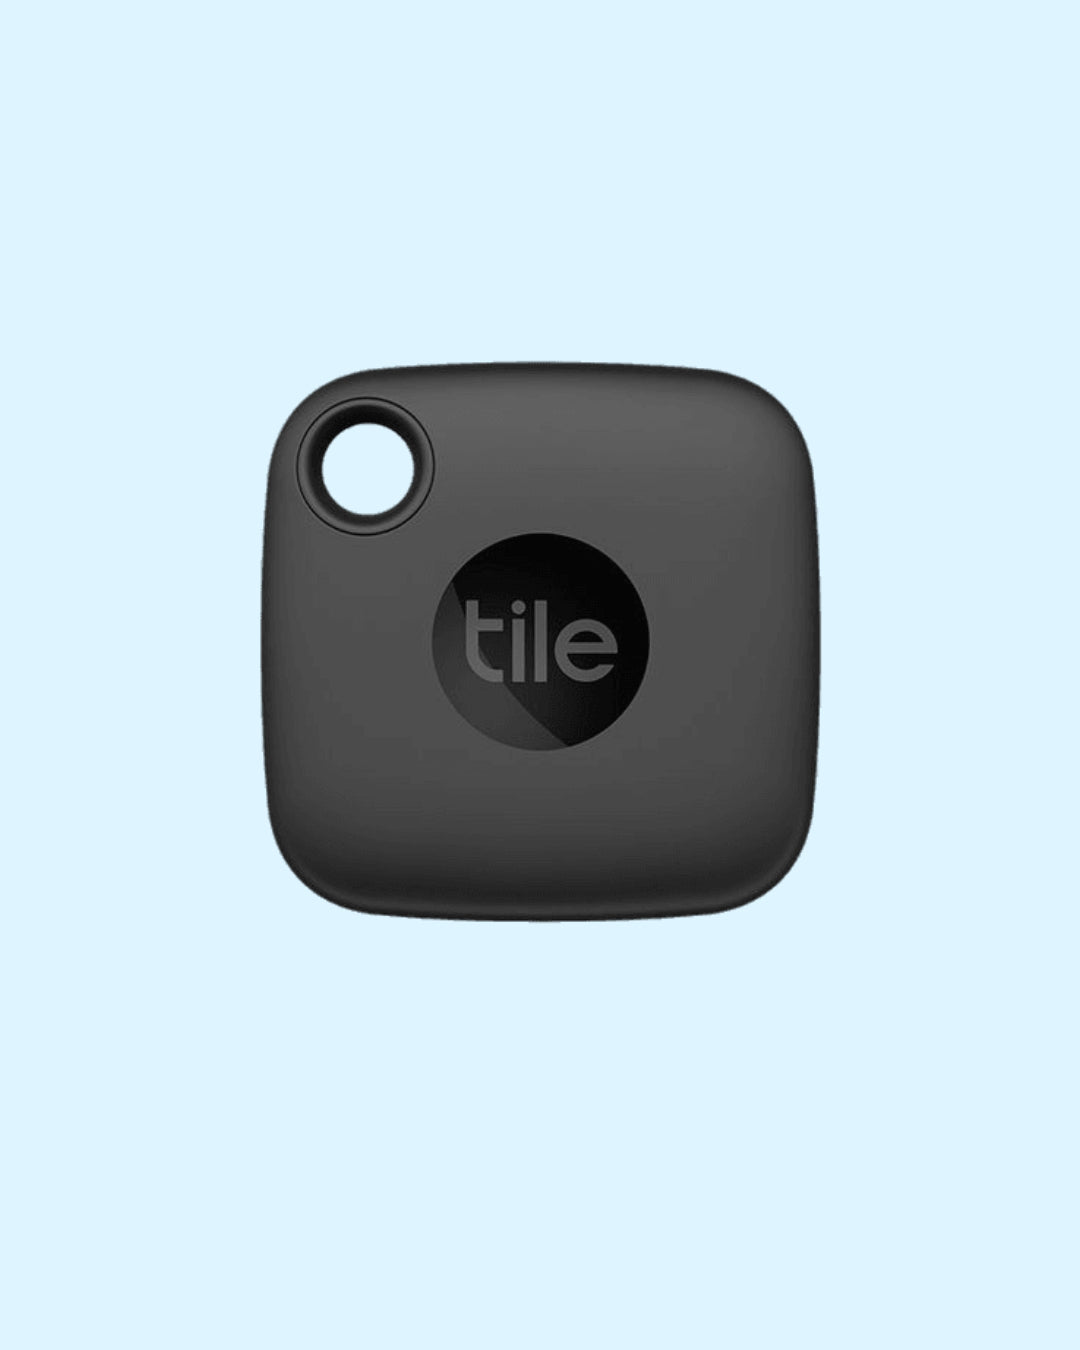 Tile Mate Bluetooth Tracker (2022, White) RE-40001 B&H Photo